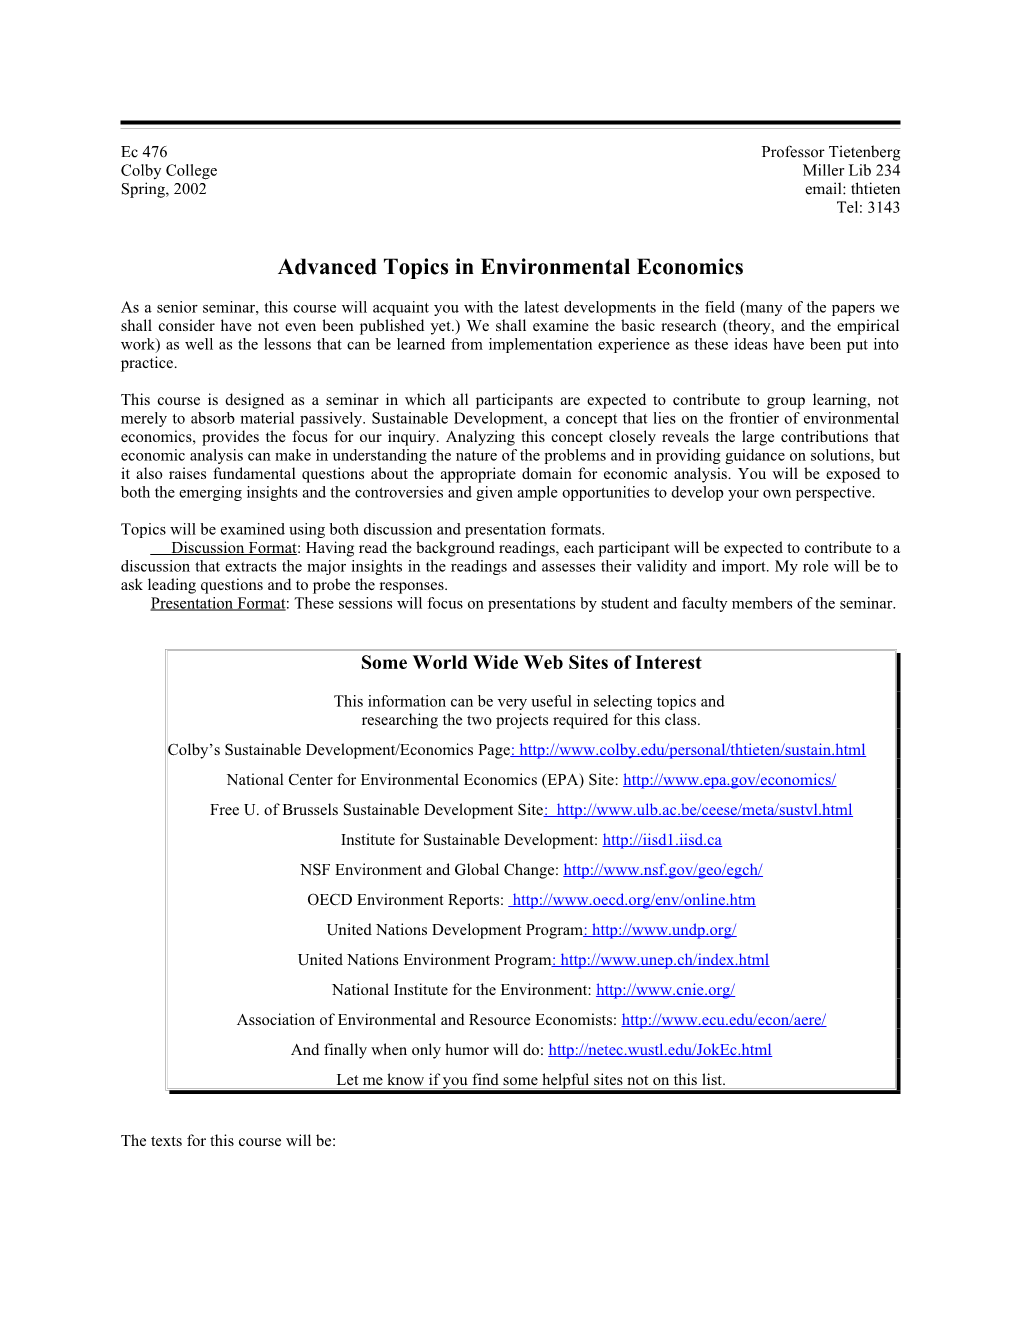 Advanced Topics in Environmental Economics